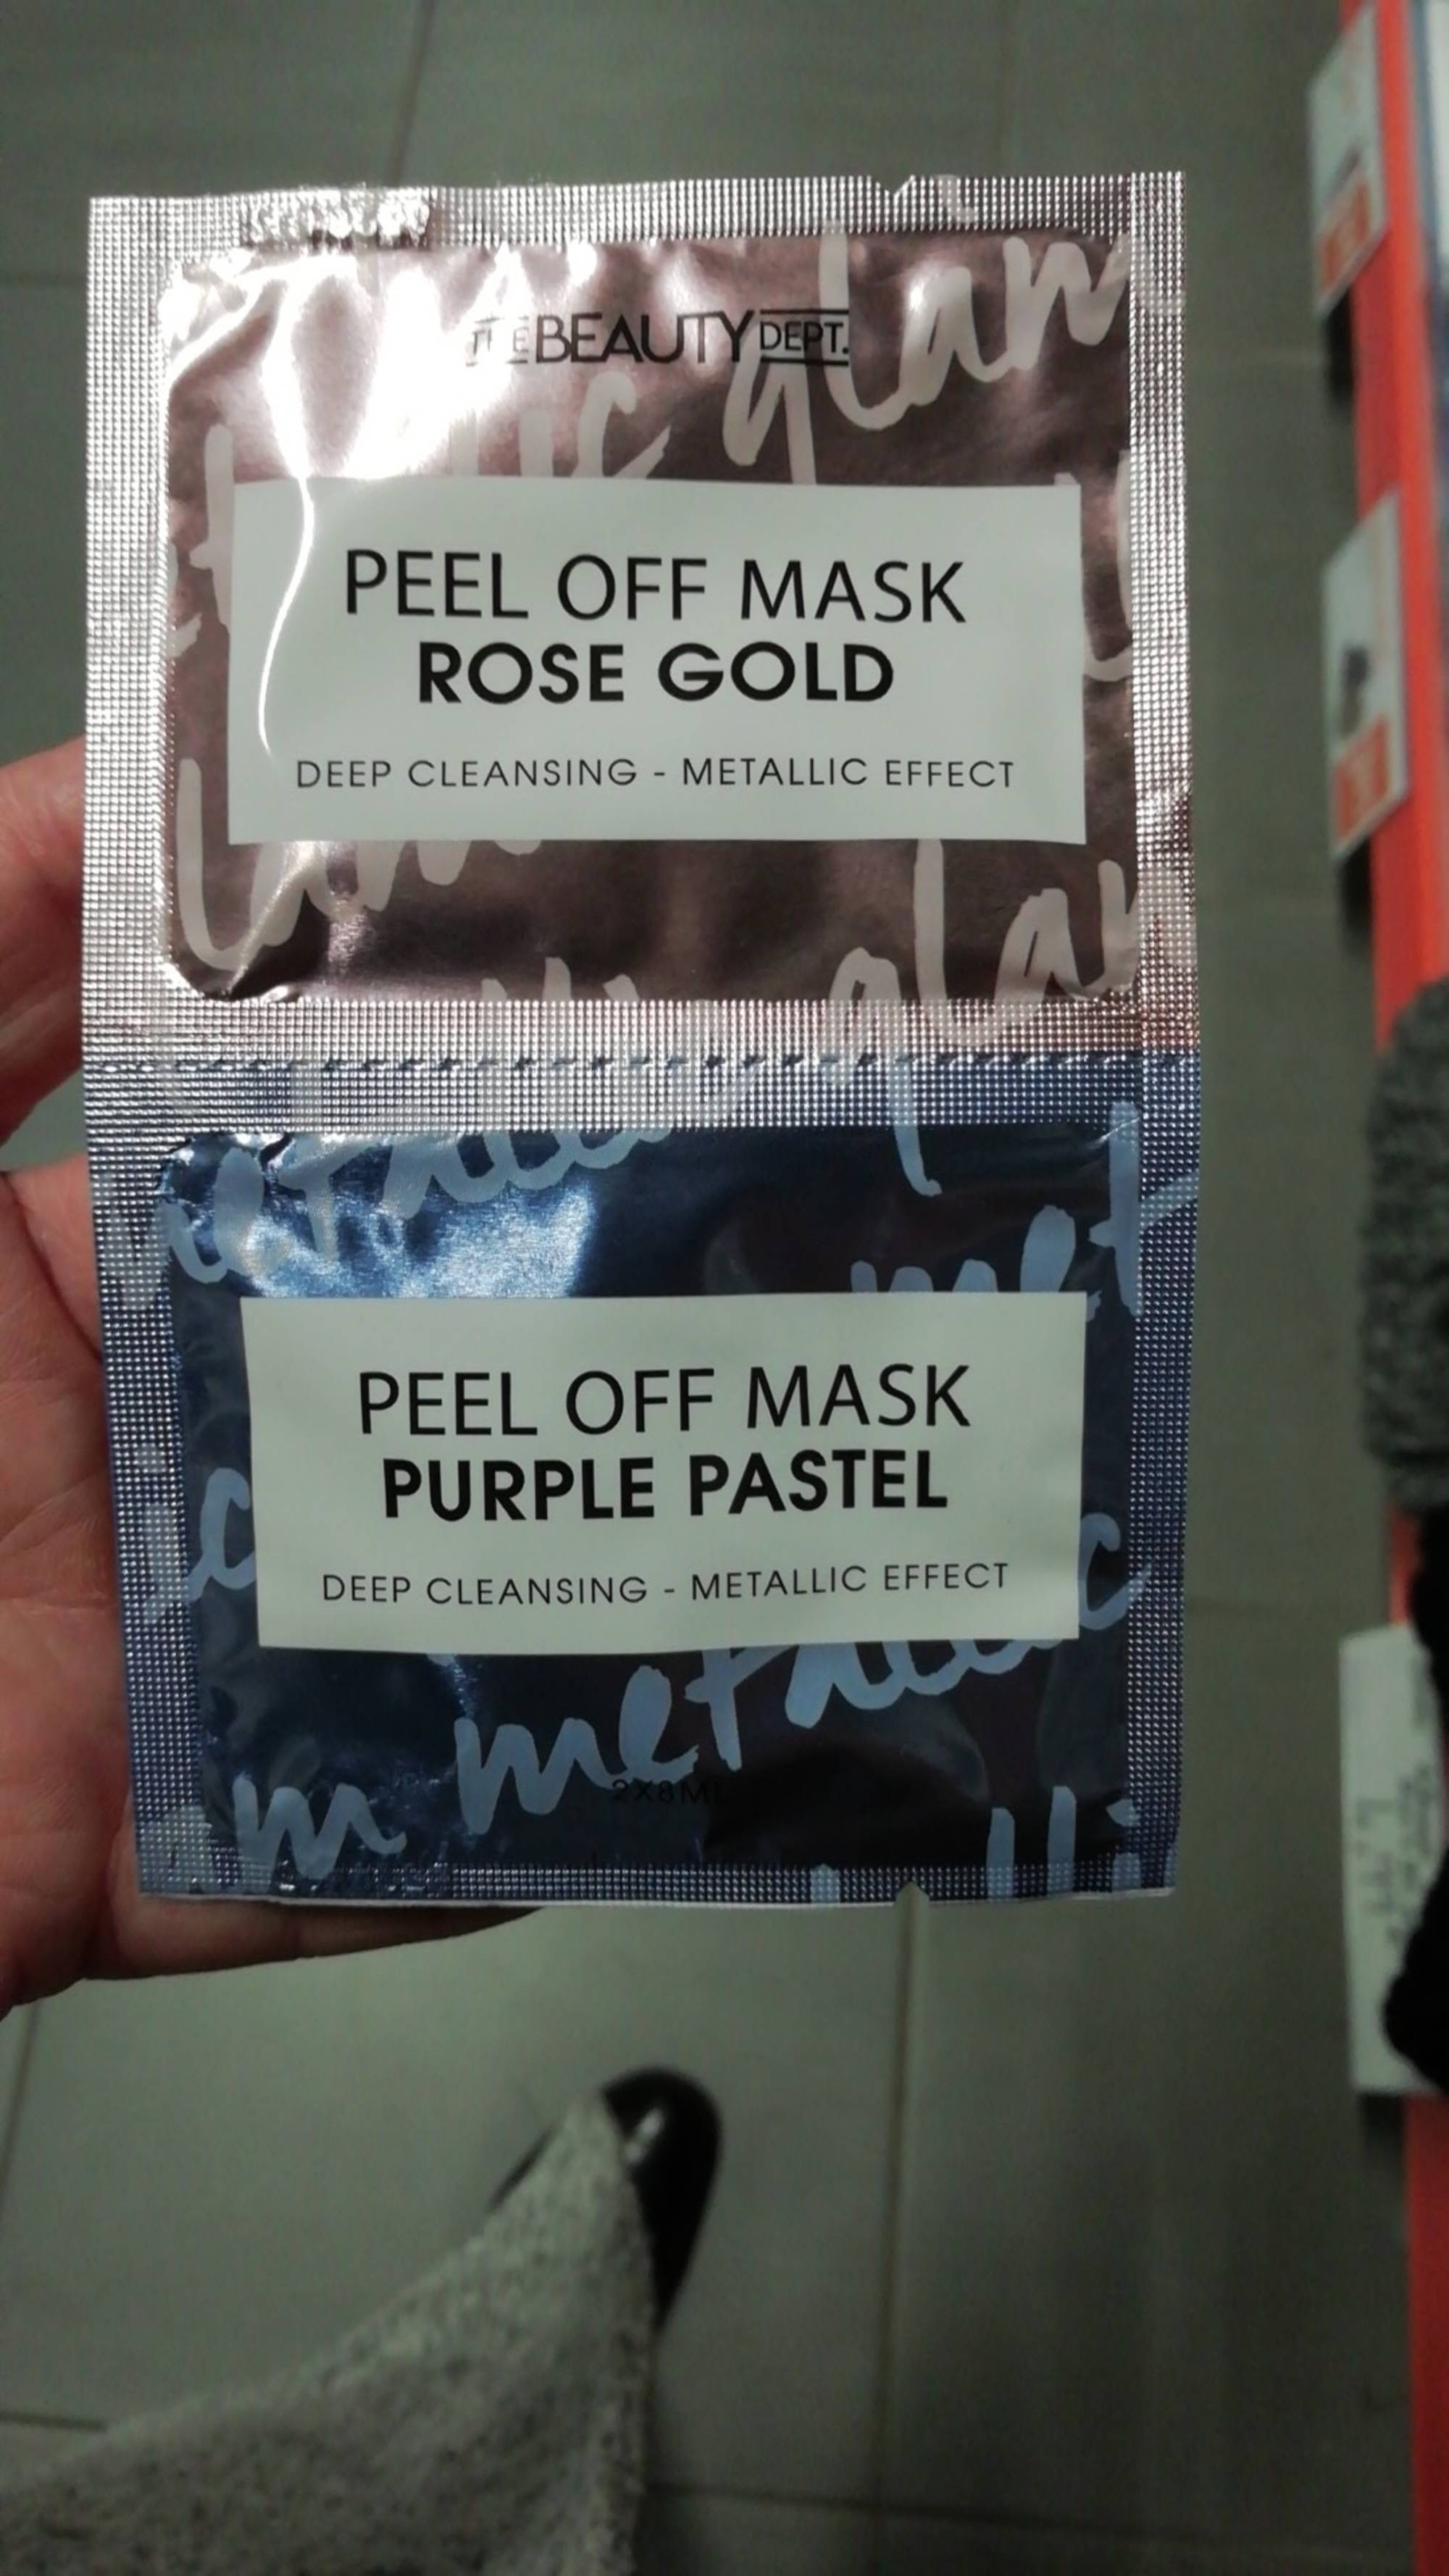 THE BEAUTY DEPT - Rose gold & purple pastel - Peel off mask